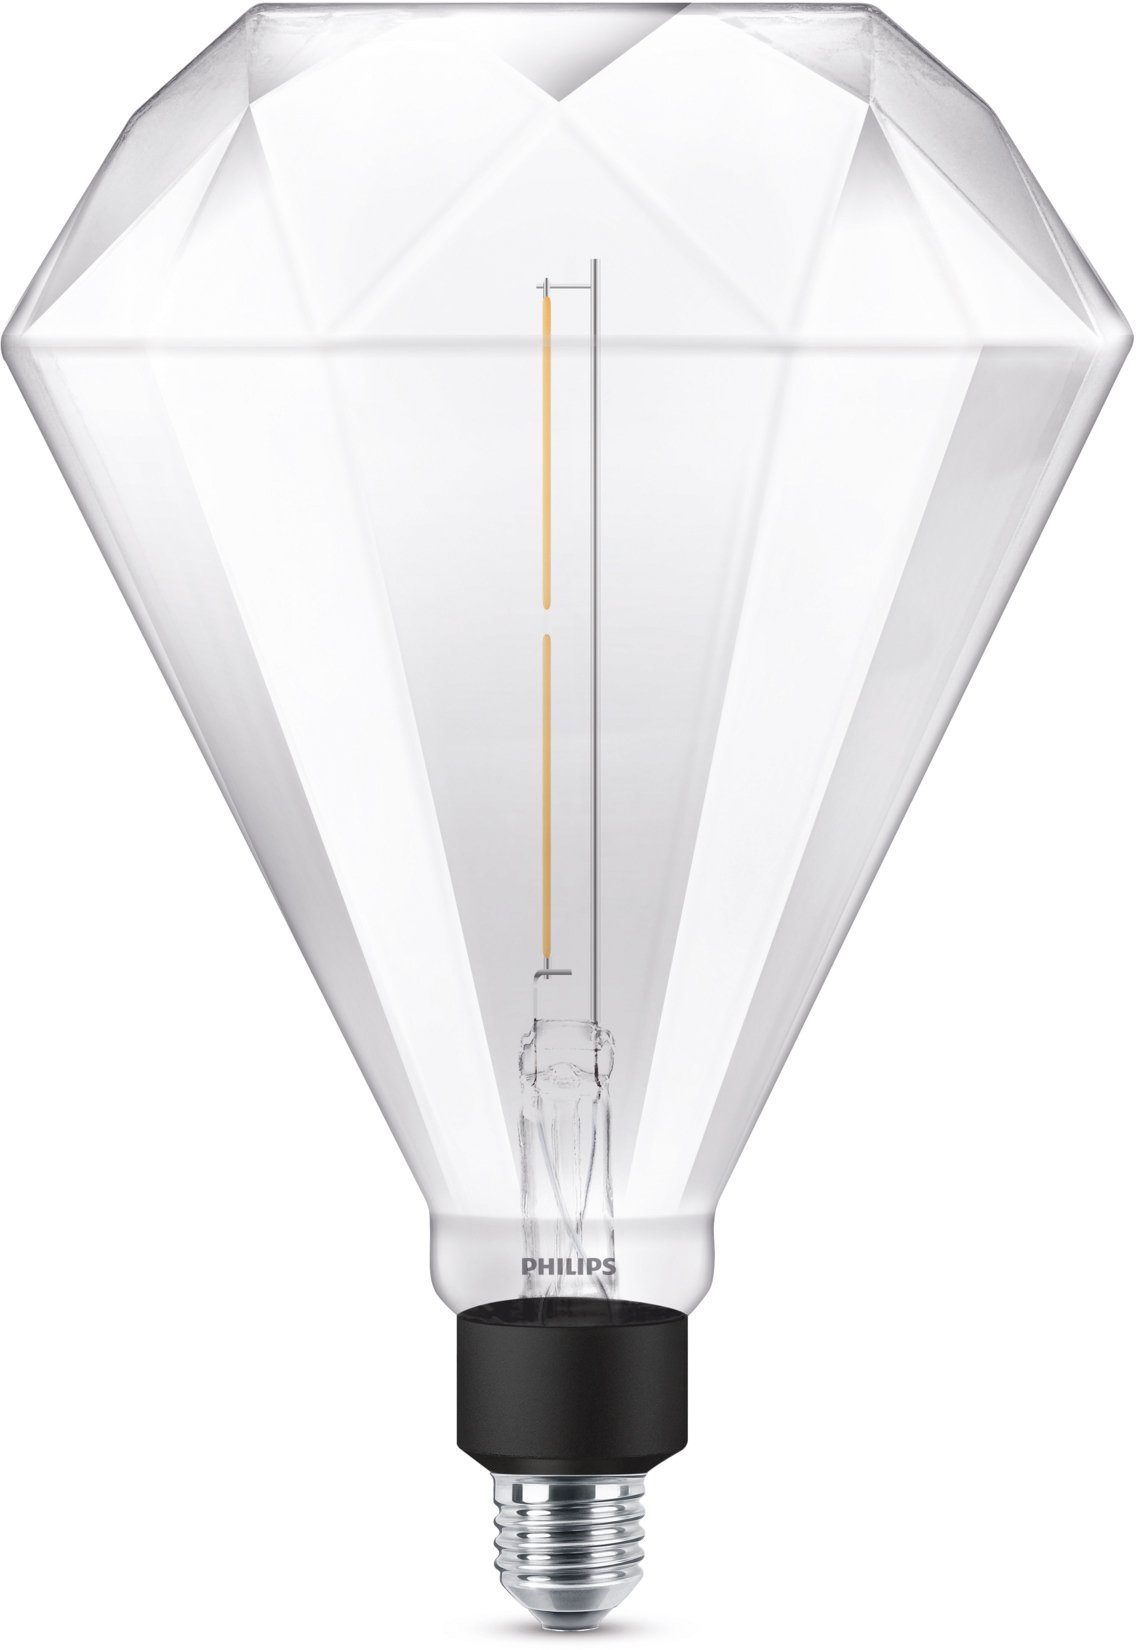 1er LED XL-35W E27 Diamond, klar St., Warmweiß Warmweiß, Lampe LED-Leuchtmittel dimmbar Philips 1 E27,